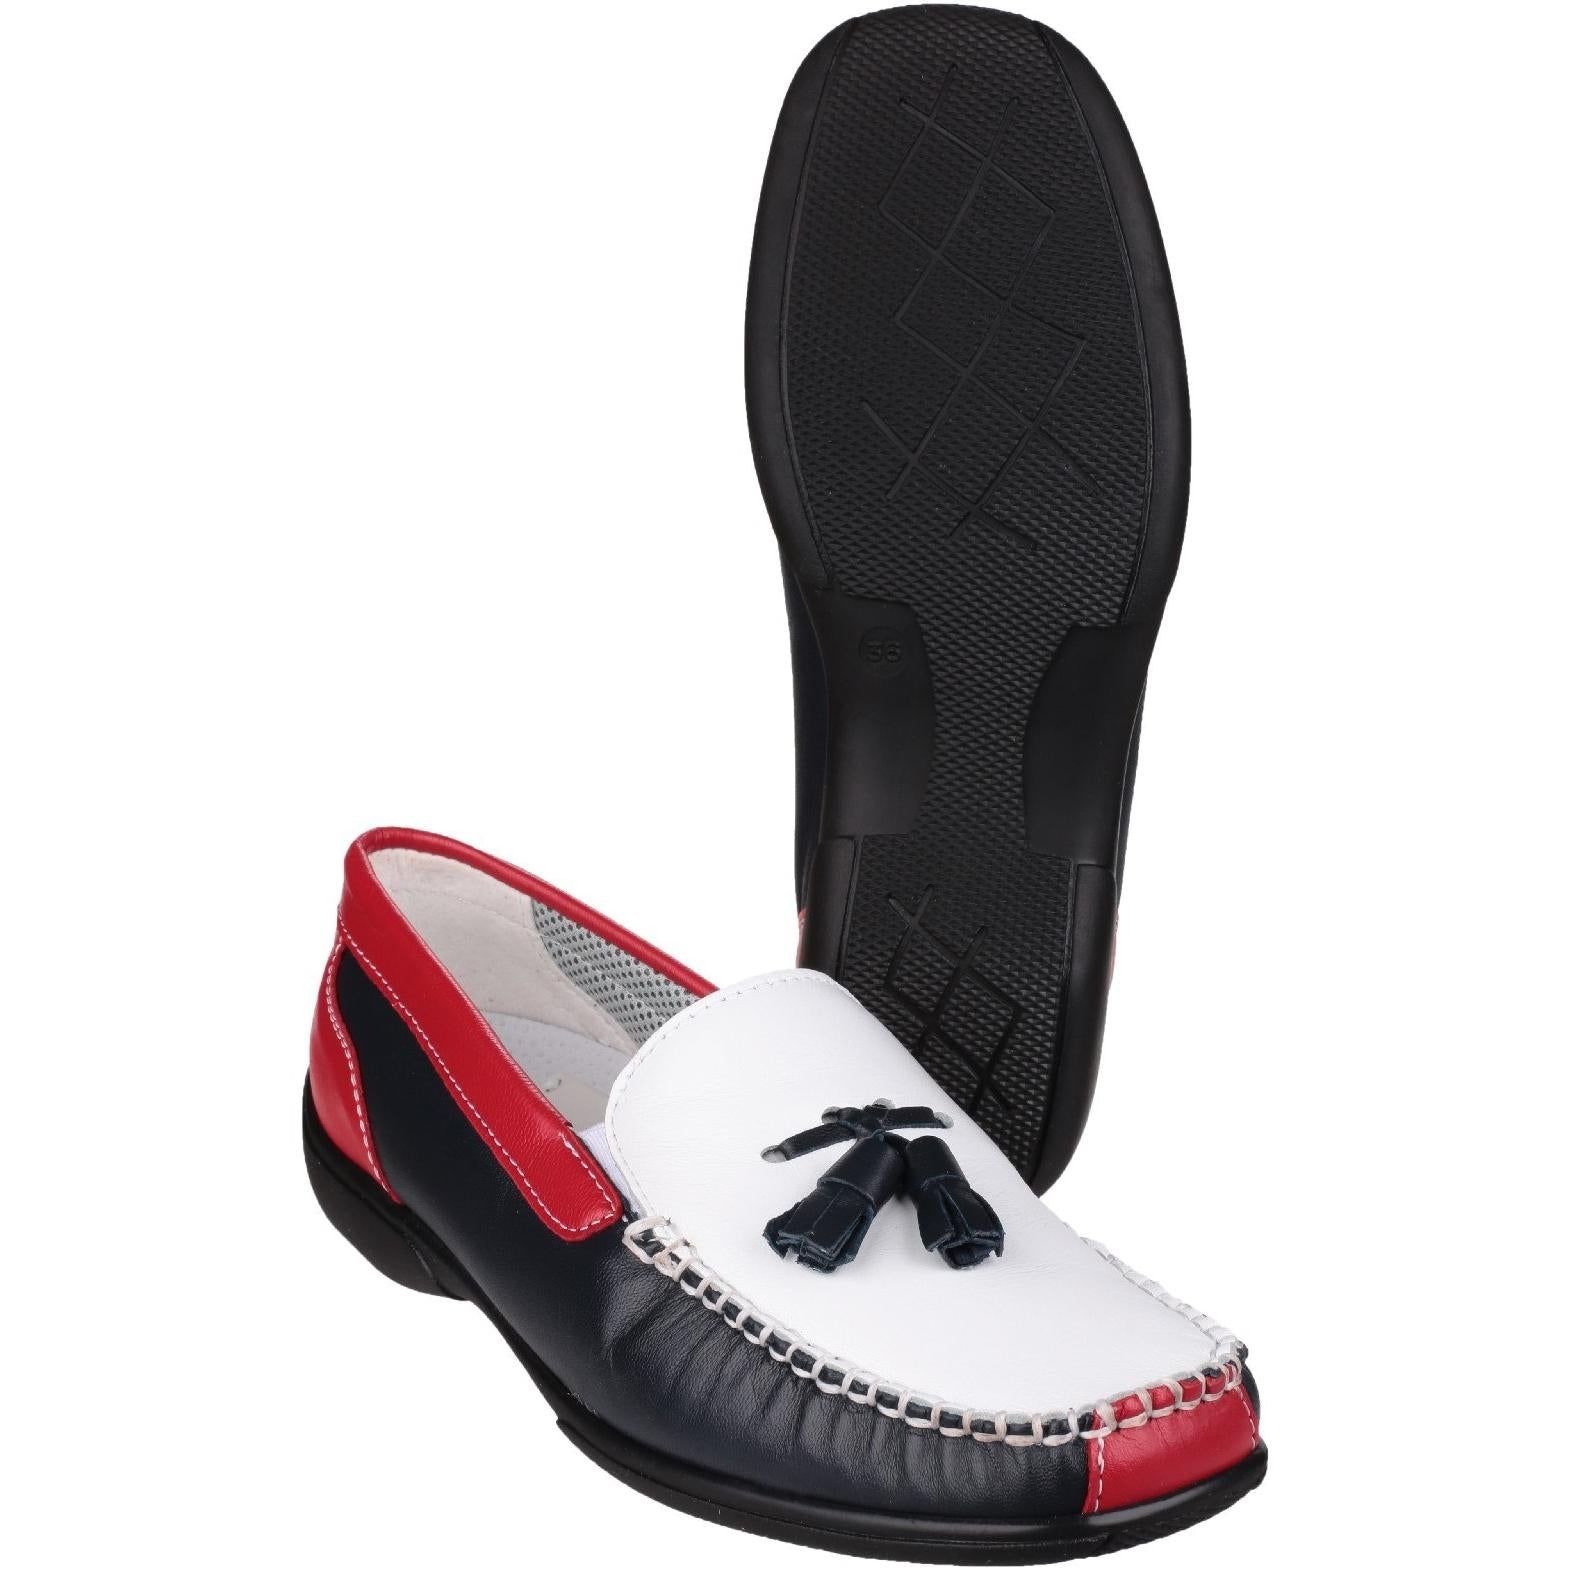 Cotswold Biddlestone Loafer Shoe